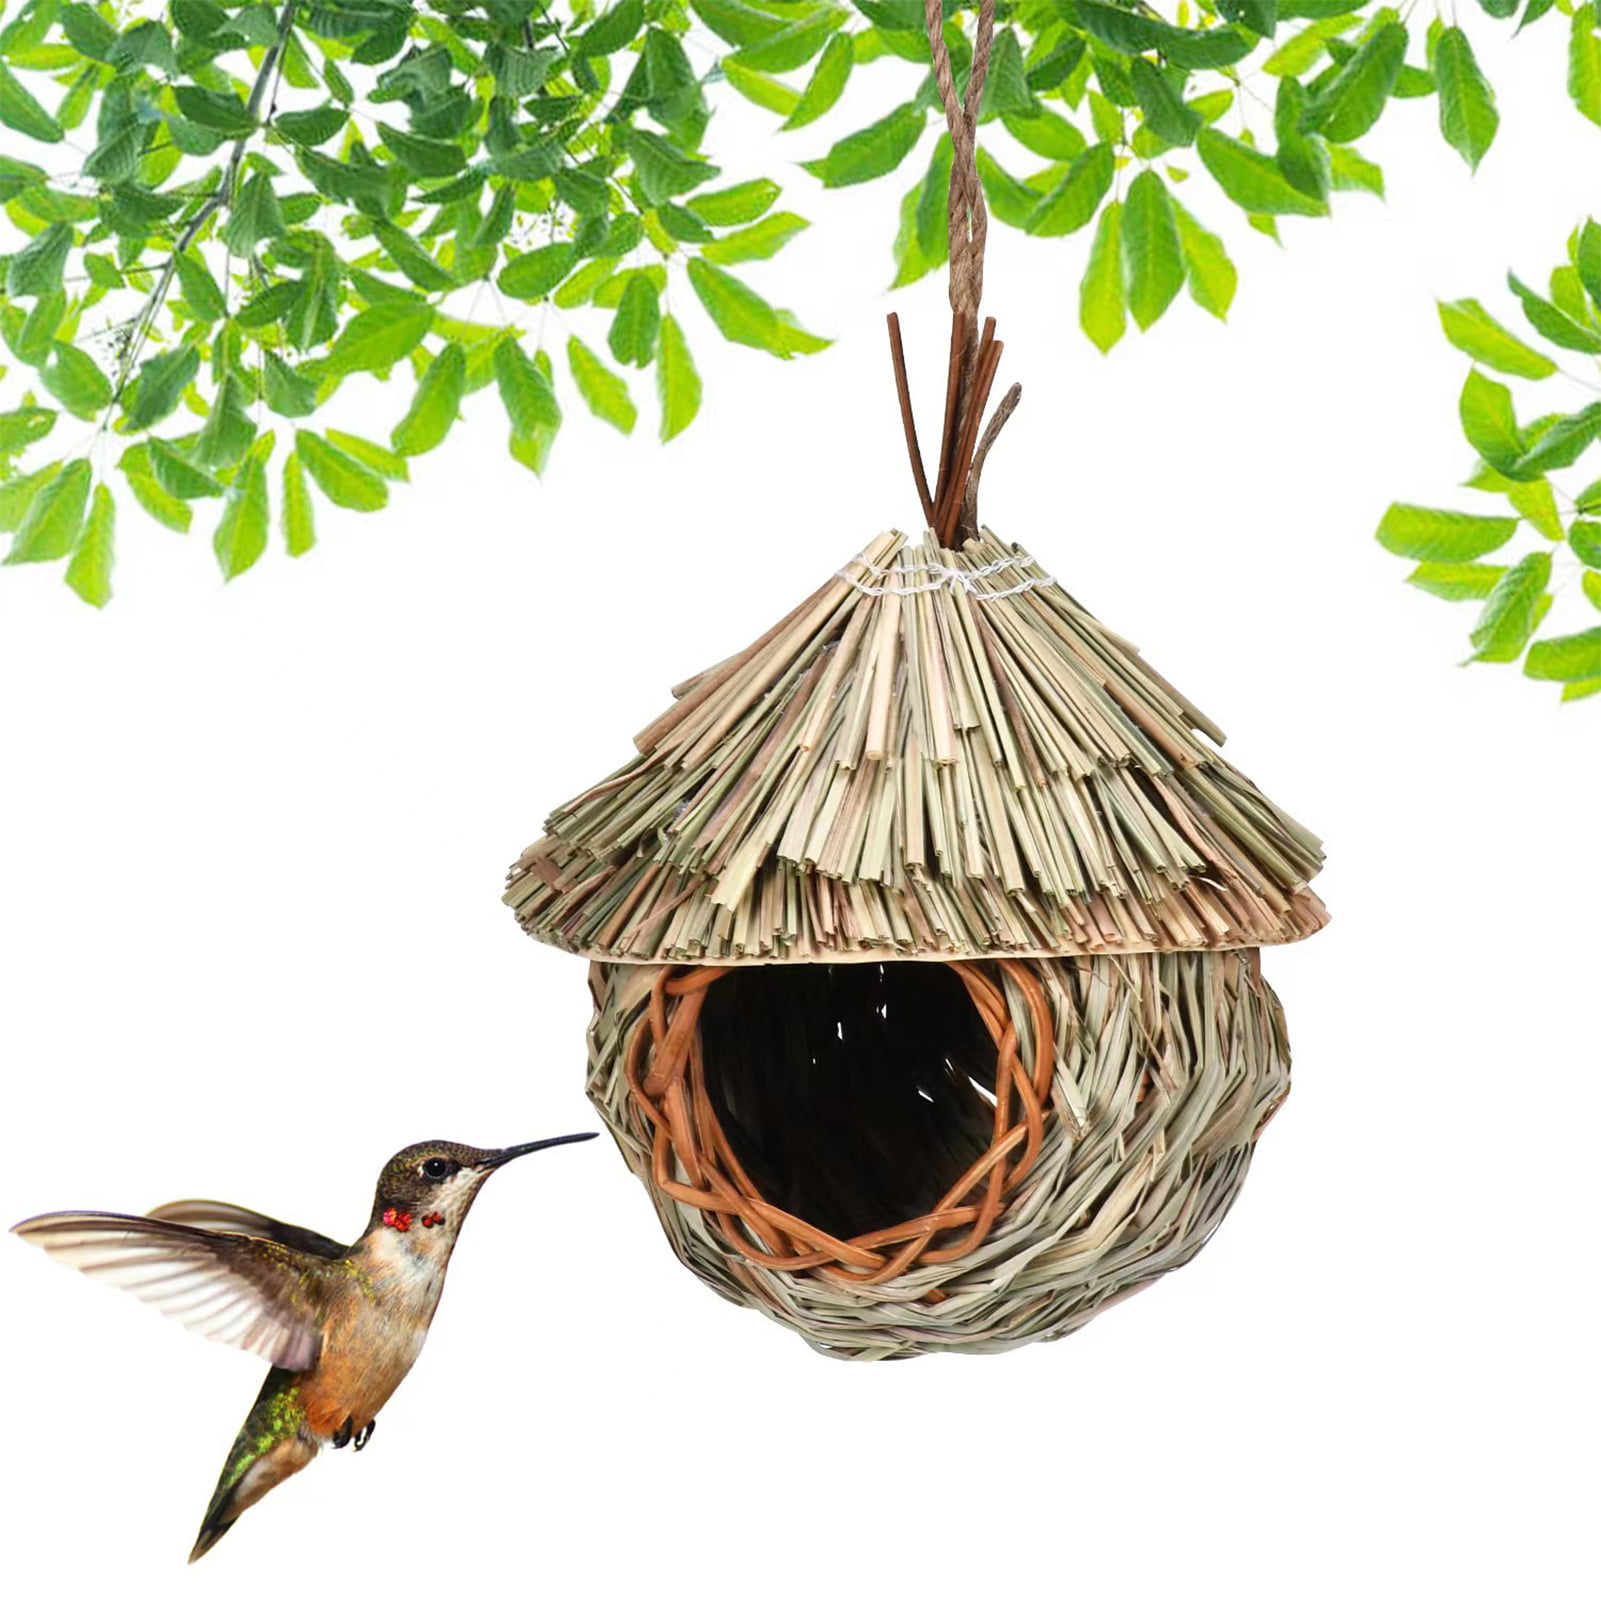 Details about   3pcs Bird House Hanging Birdhouse Hummingbird Nest Fiber Hand-Woven Roosting 